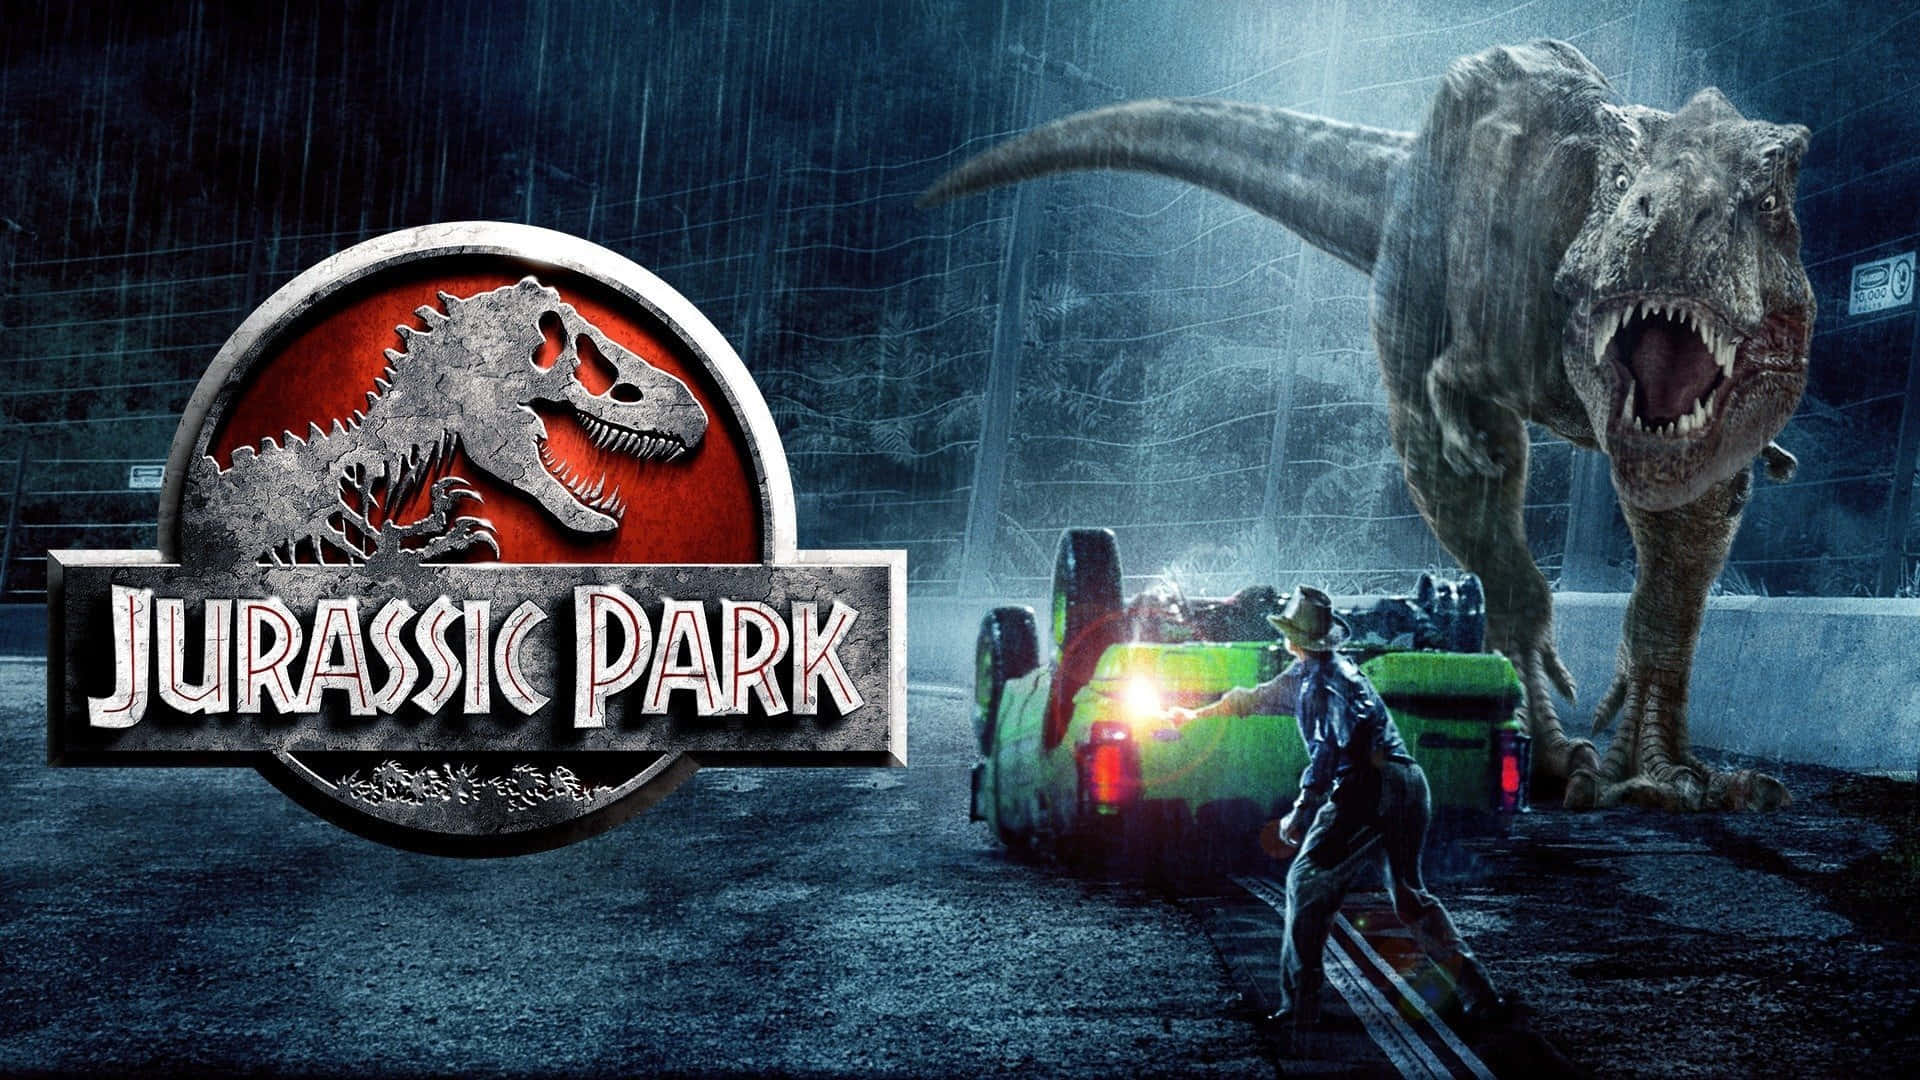 Feel the Thrills of Jurassic Park - Anywhere